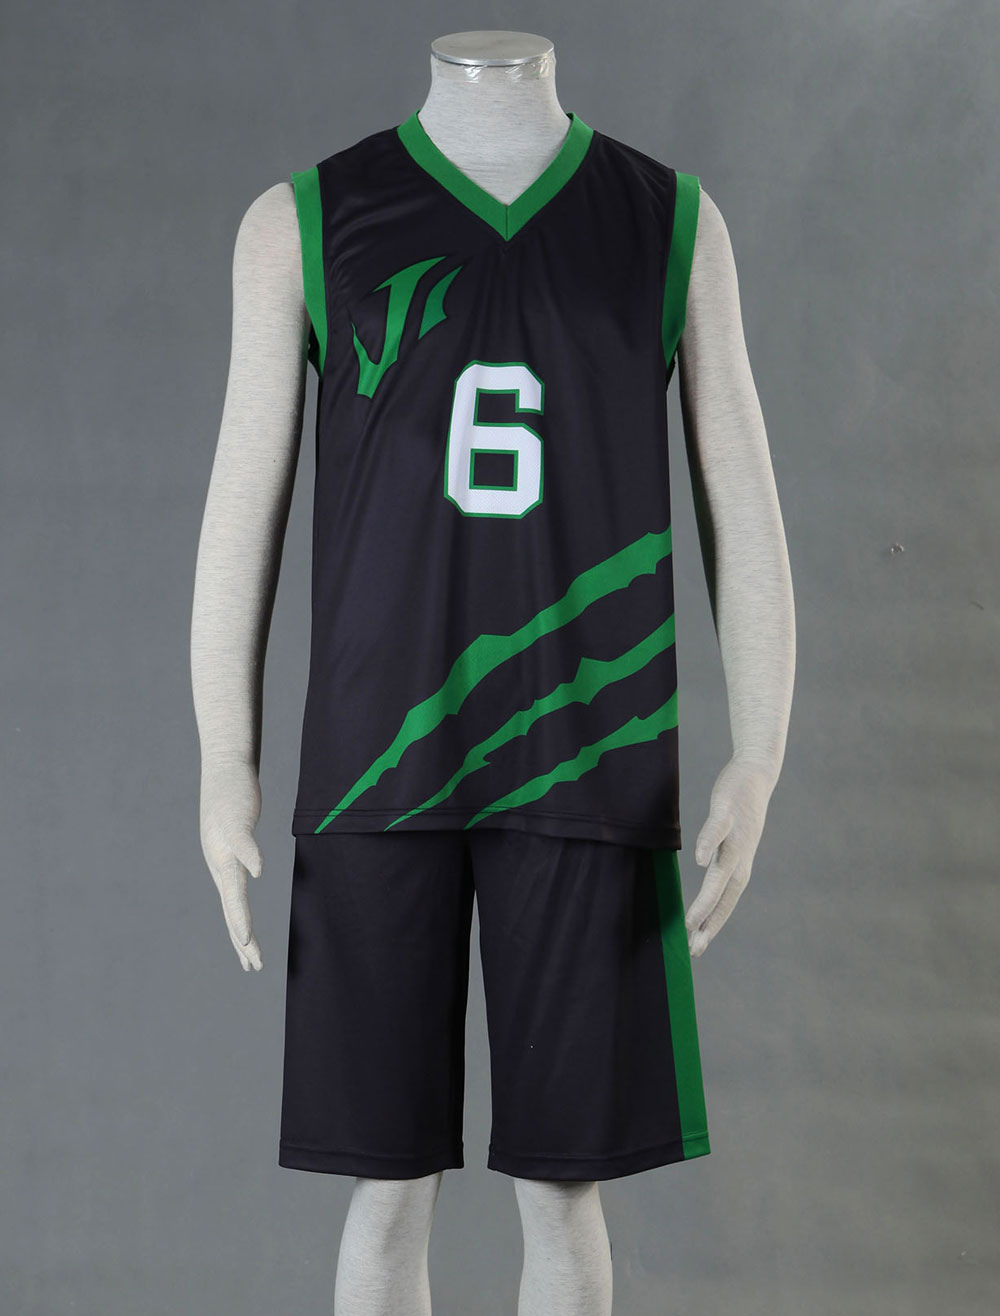 kuroko no basket jersey design